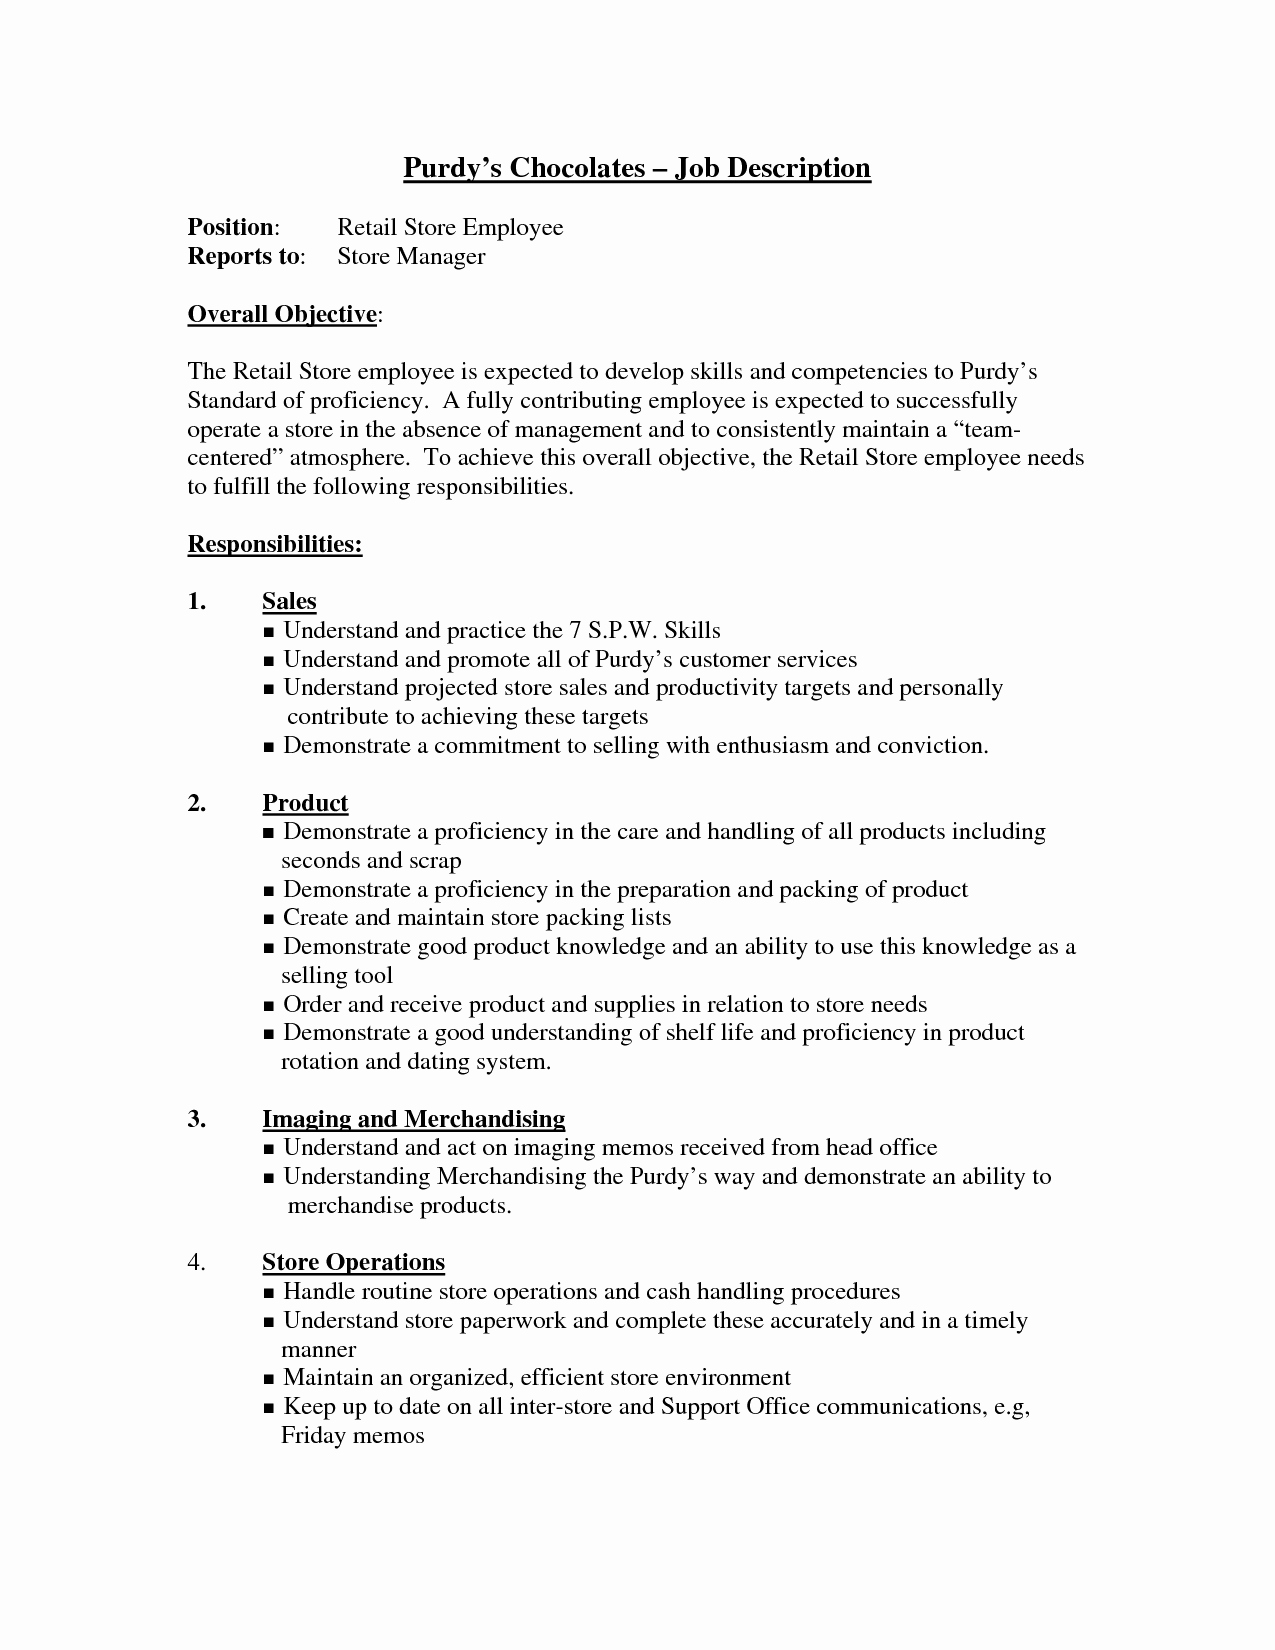 Employee Duties and Responsibilities Template Inspirational Best S Of Employee Job Description Sample Resume